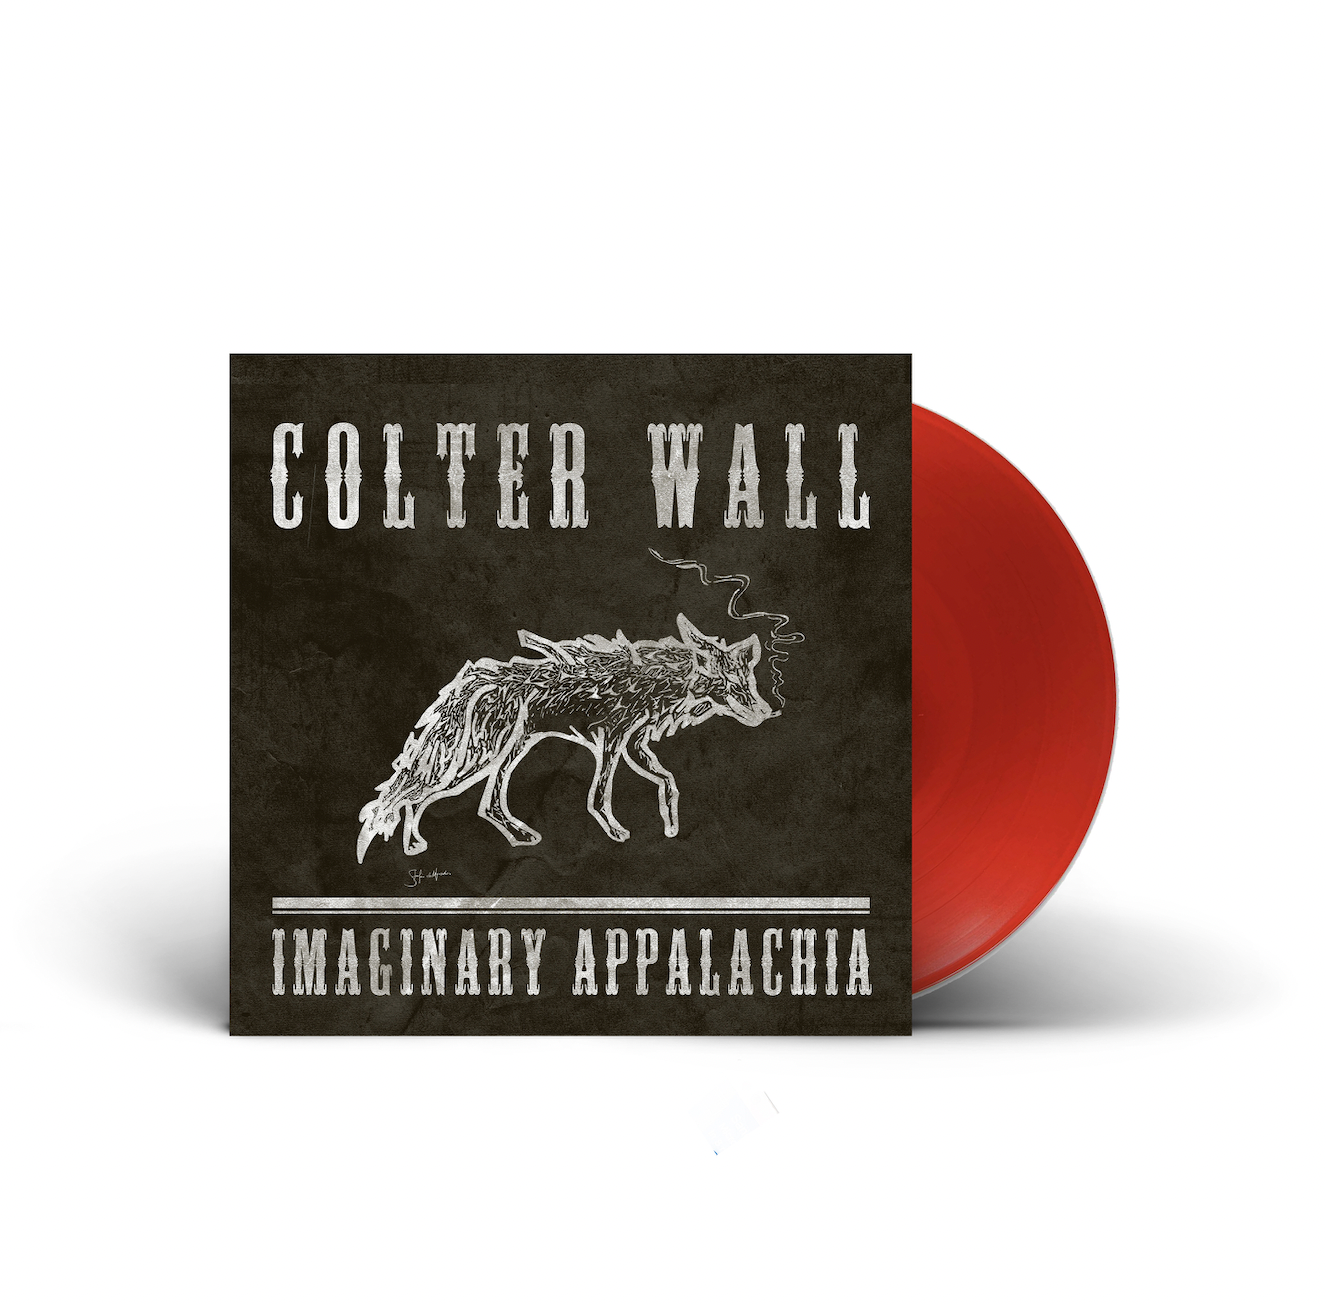 Colter Wall- Imaginary Appalachia (Red Vinyl)